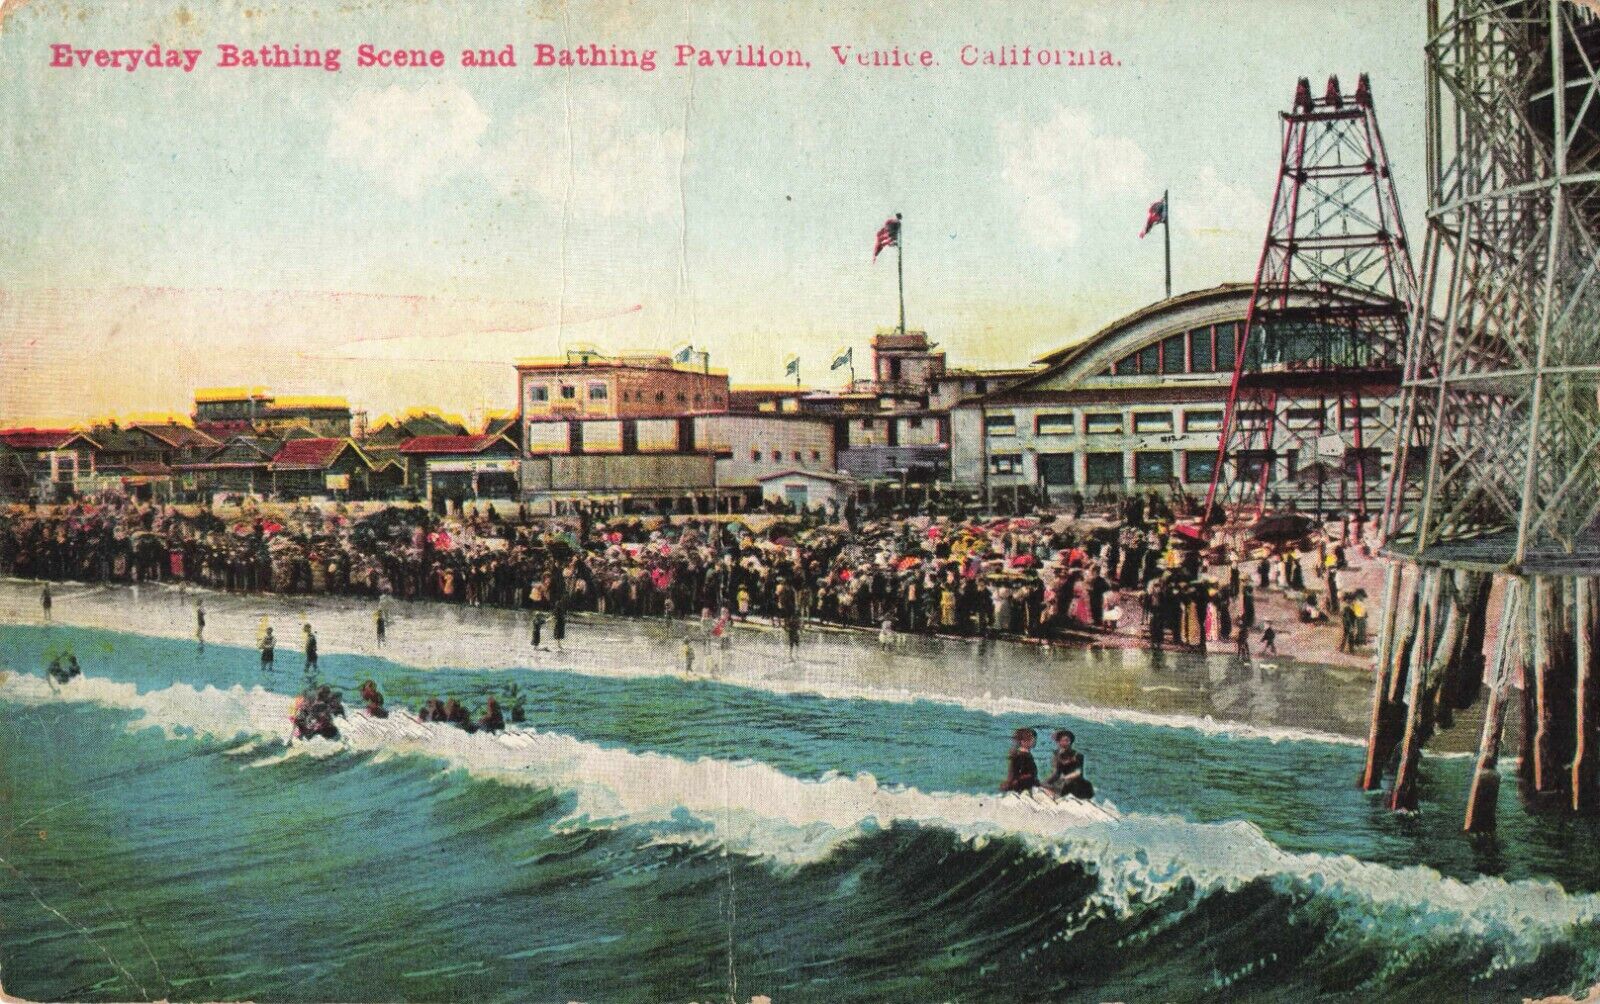 Everyday Bathing Scene & Pavilion, Venice, California CA - c1910 VTG PC